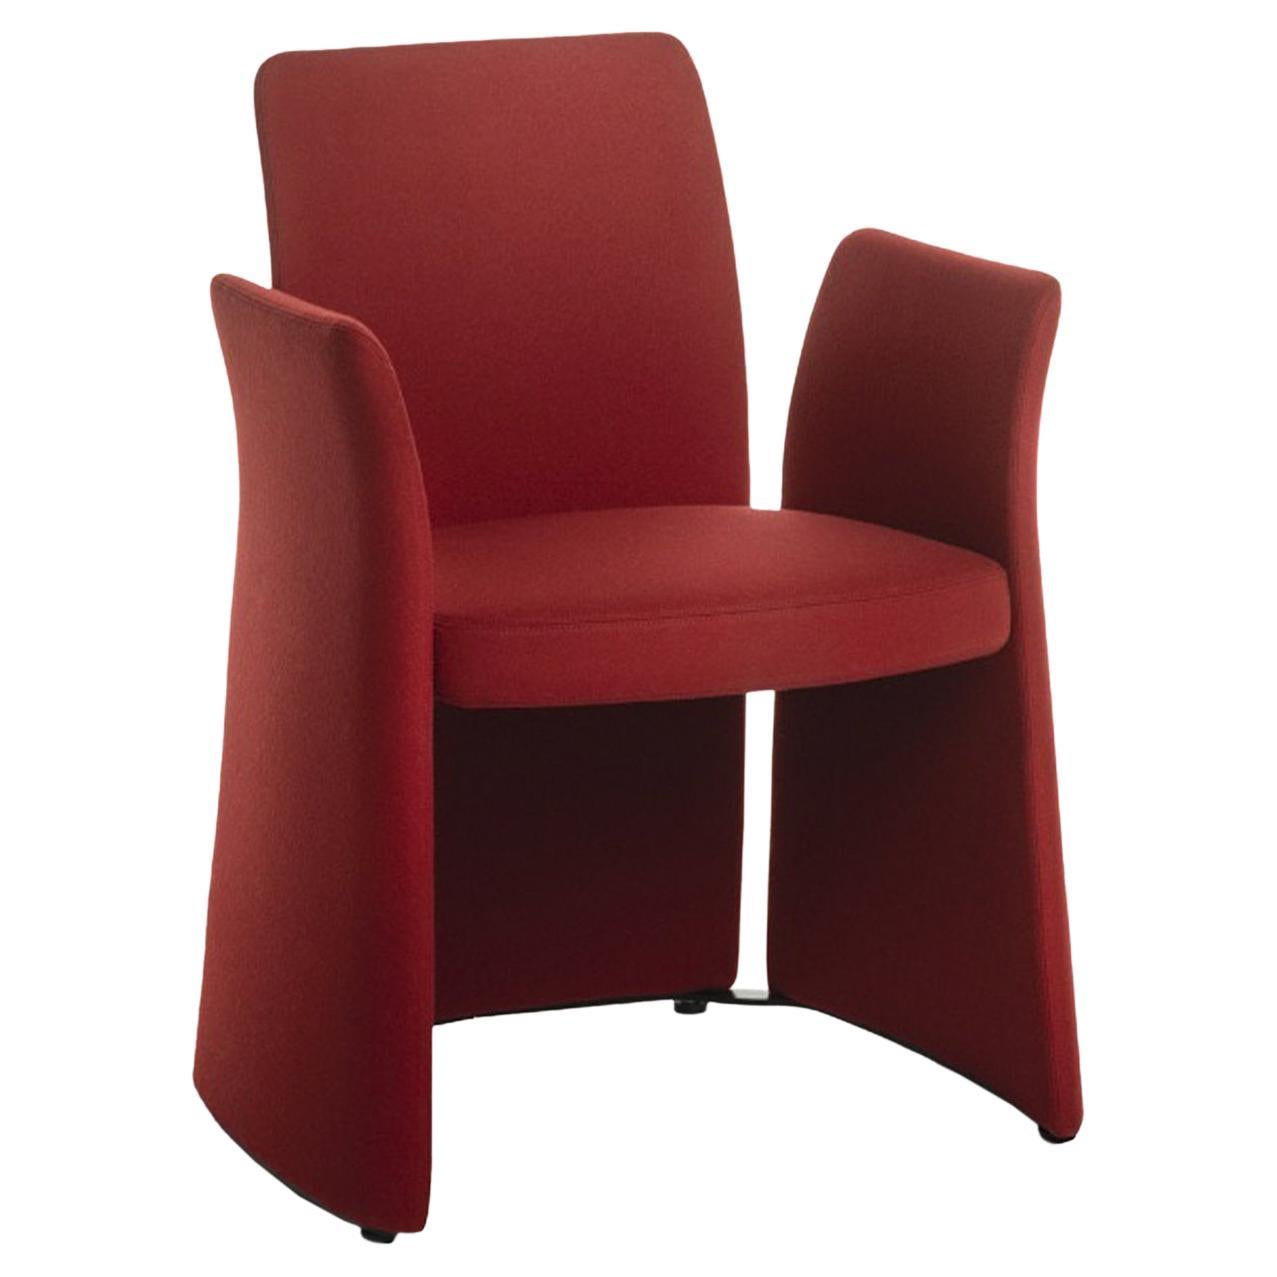 Madam Red Armchair by Radice Orlandini Designstudio